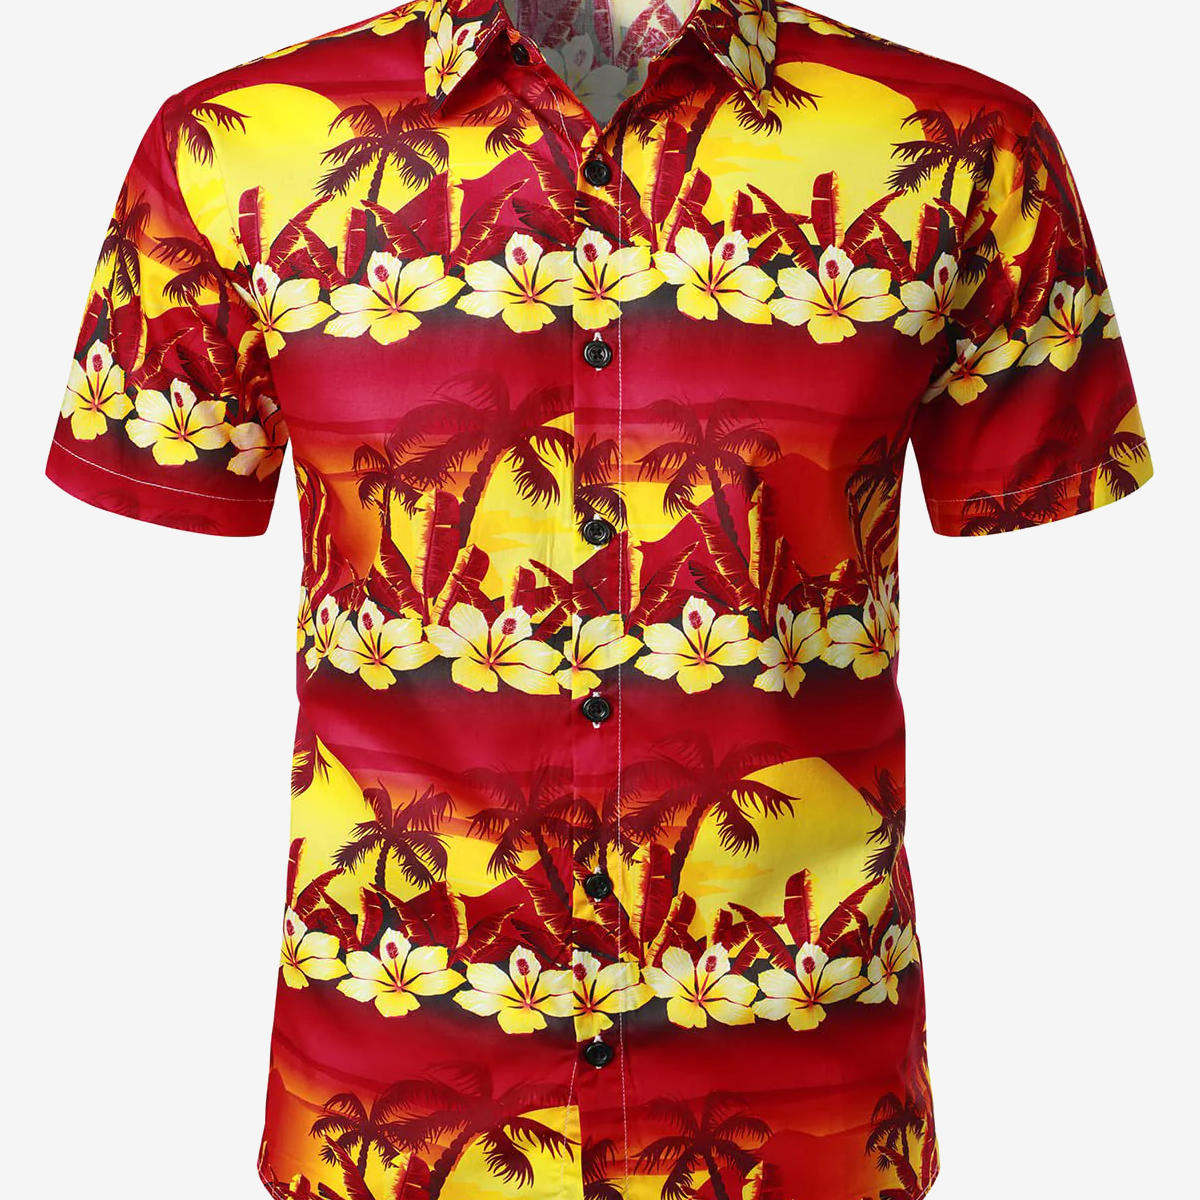 Men's Red Hawaiian Cotton Holiday Tropical Palm Tree Floral Short Sleeve Beach Button Shirt